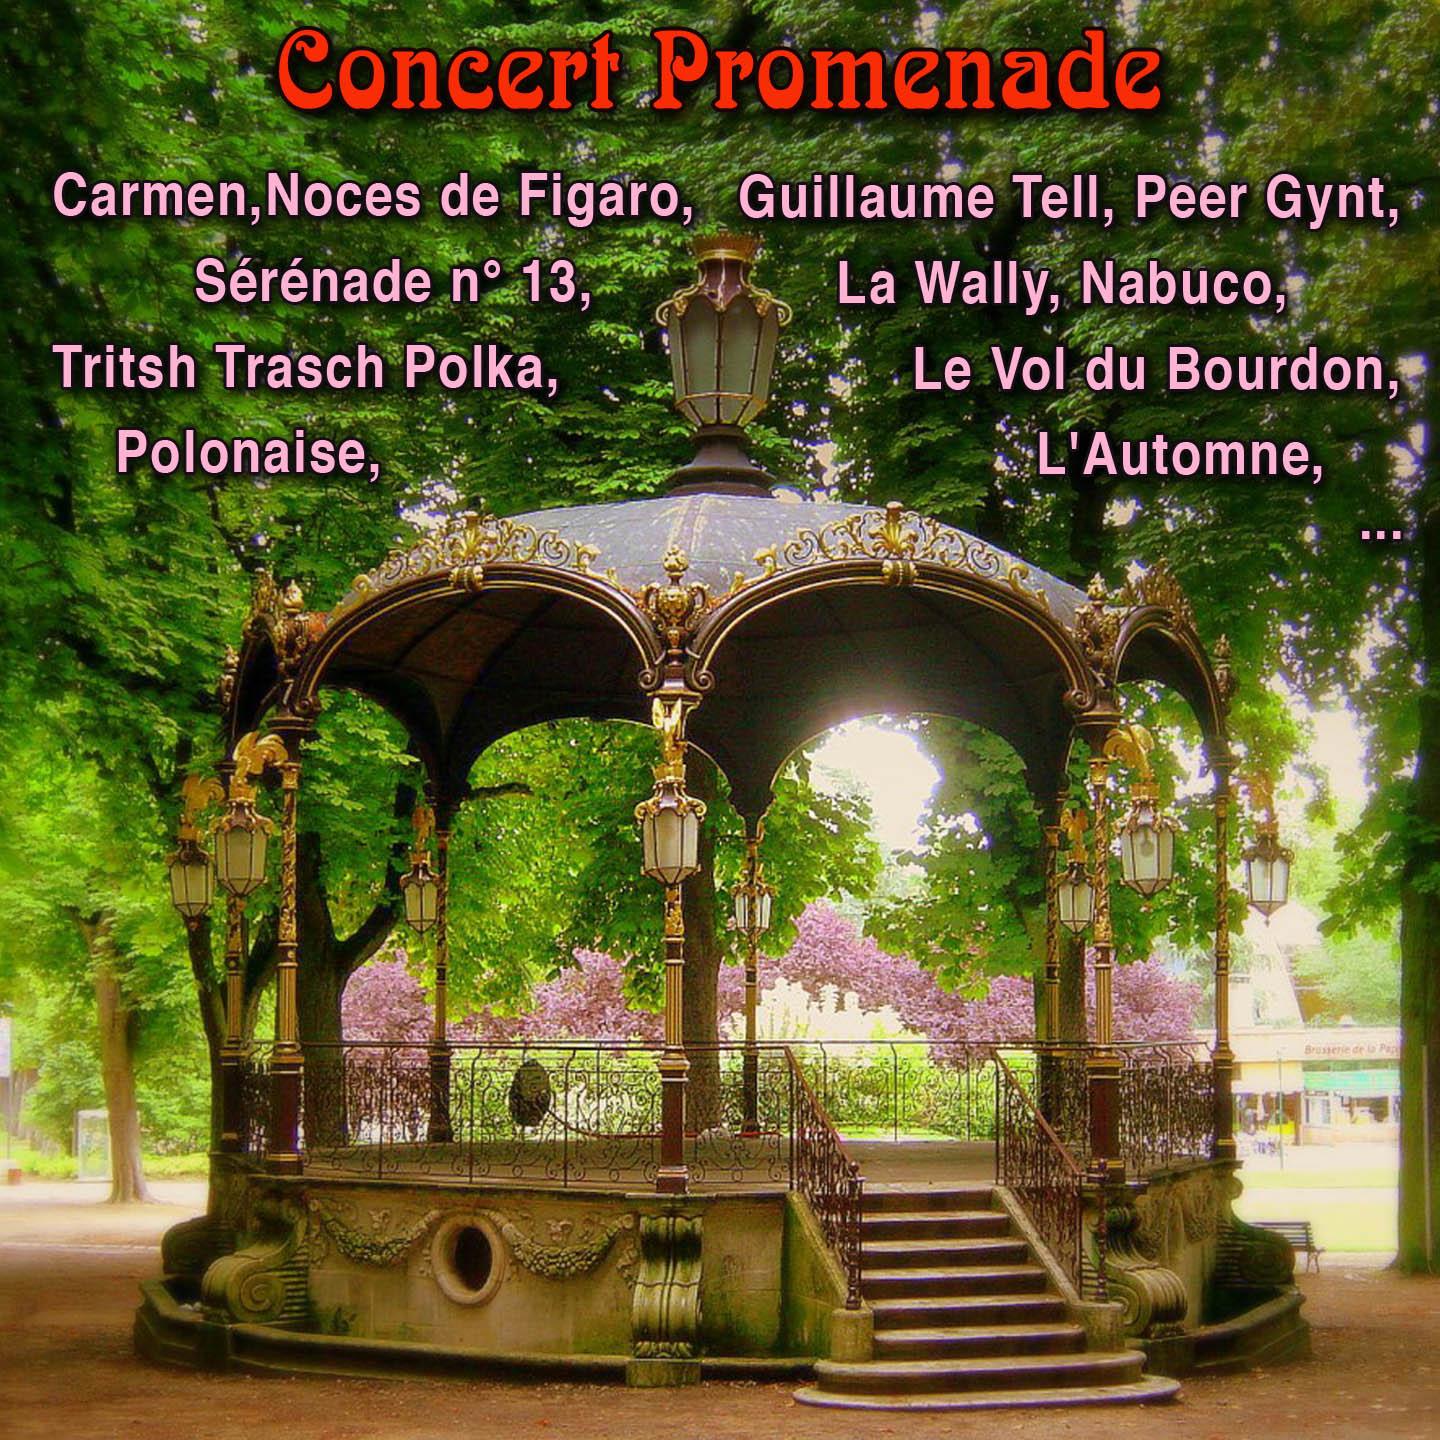 Concert promenade